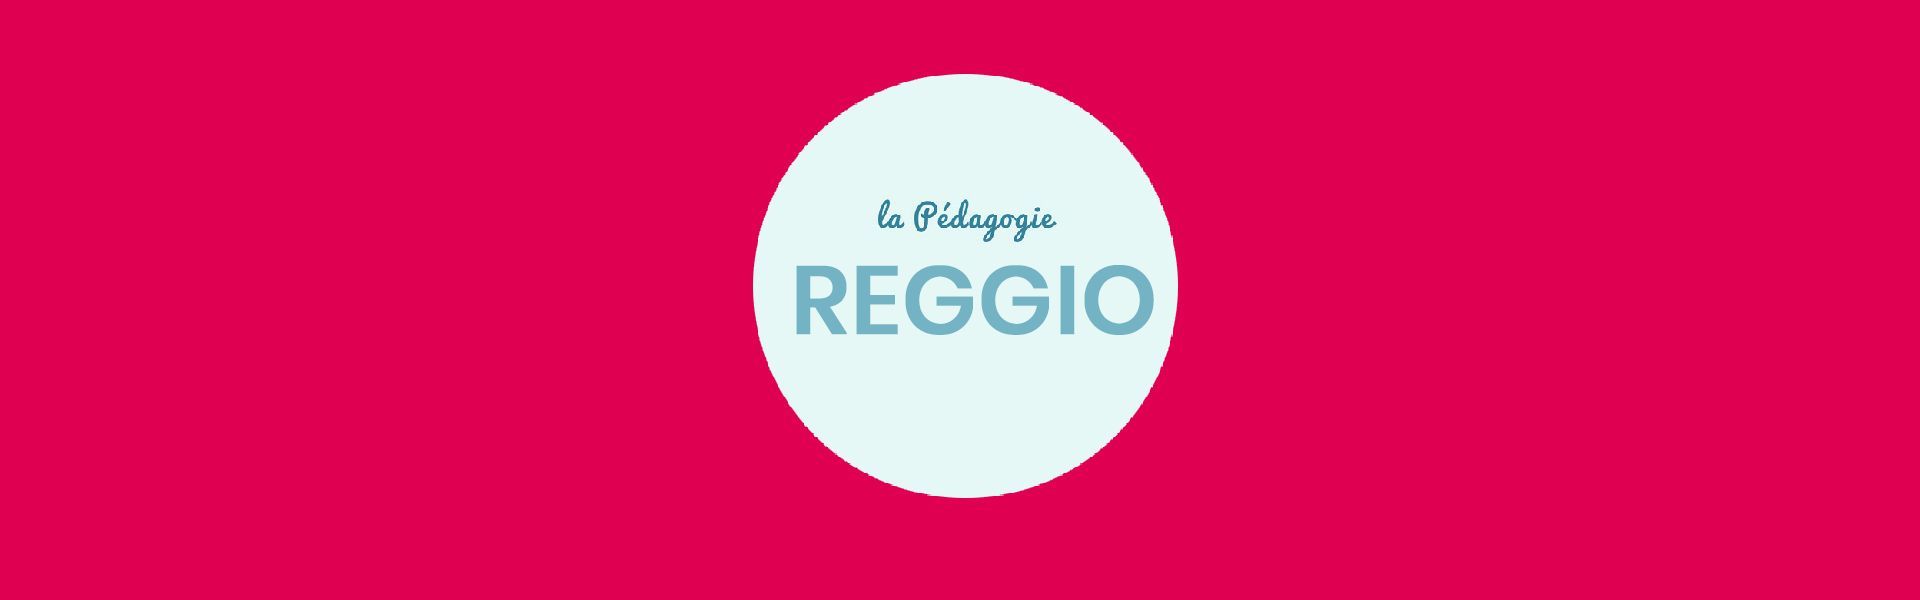 Pédagogies alternatives, Pédagogie Reggio | Everykidpro